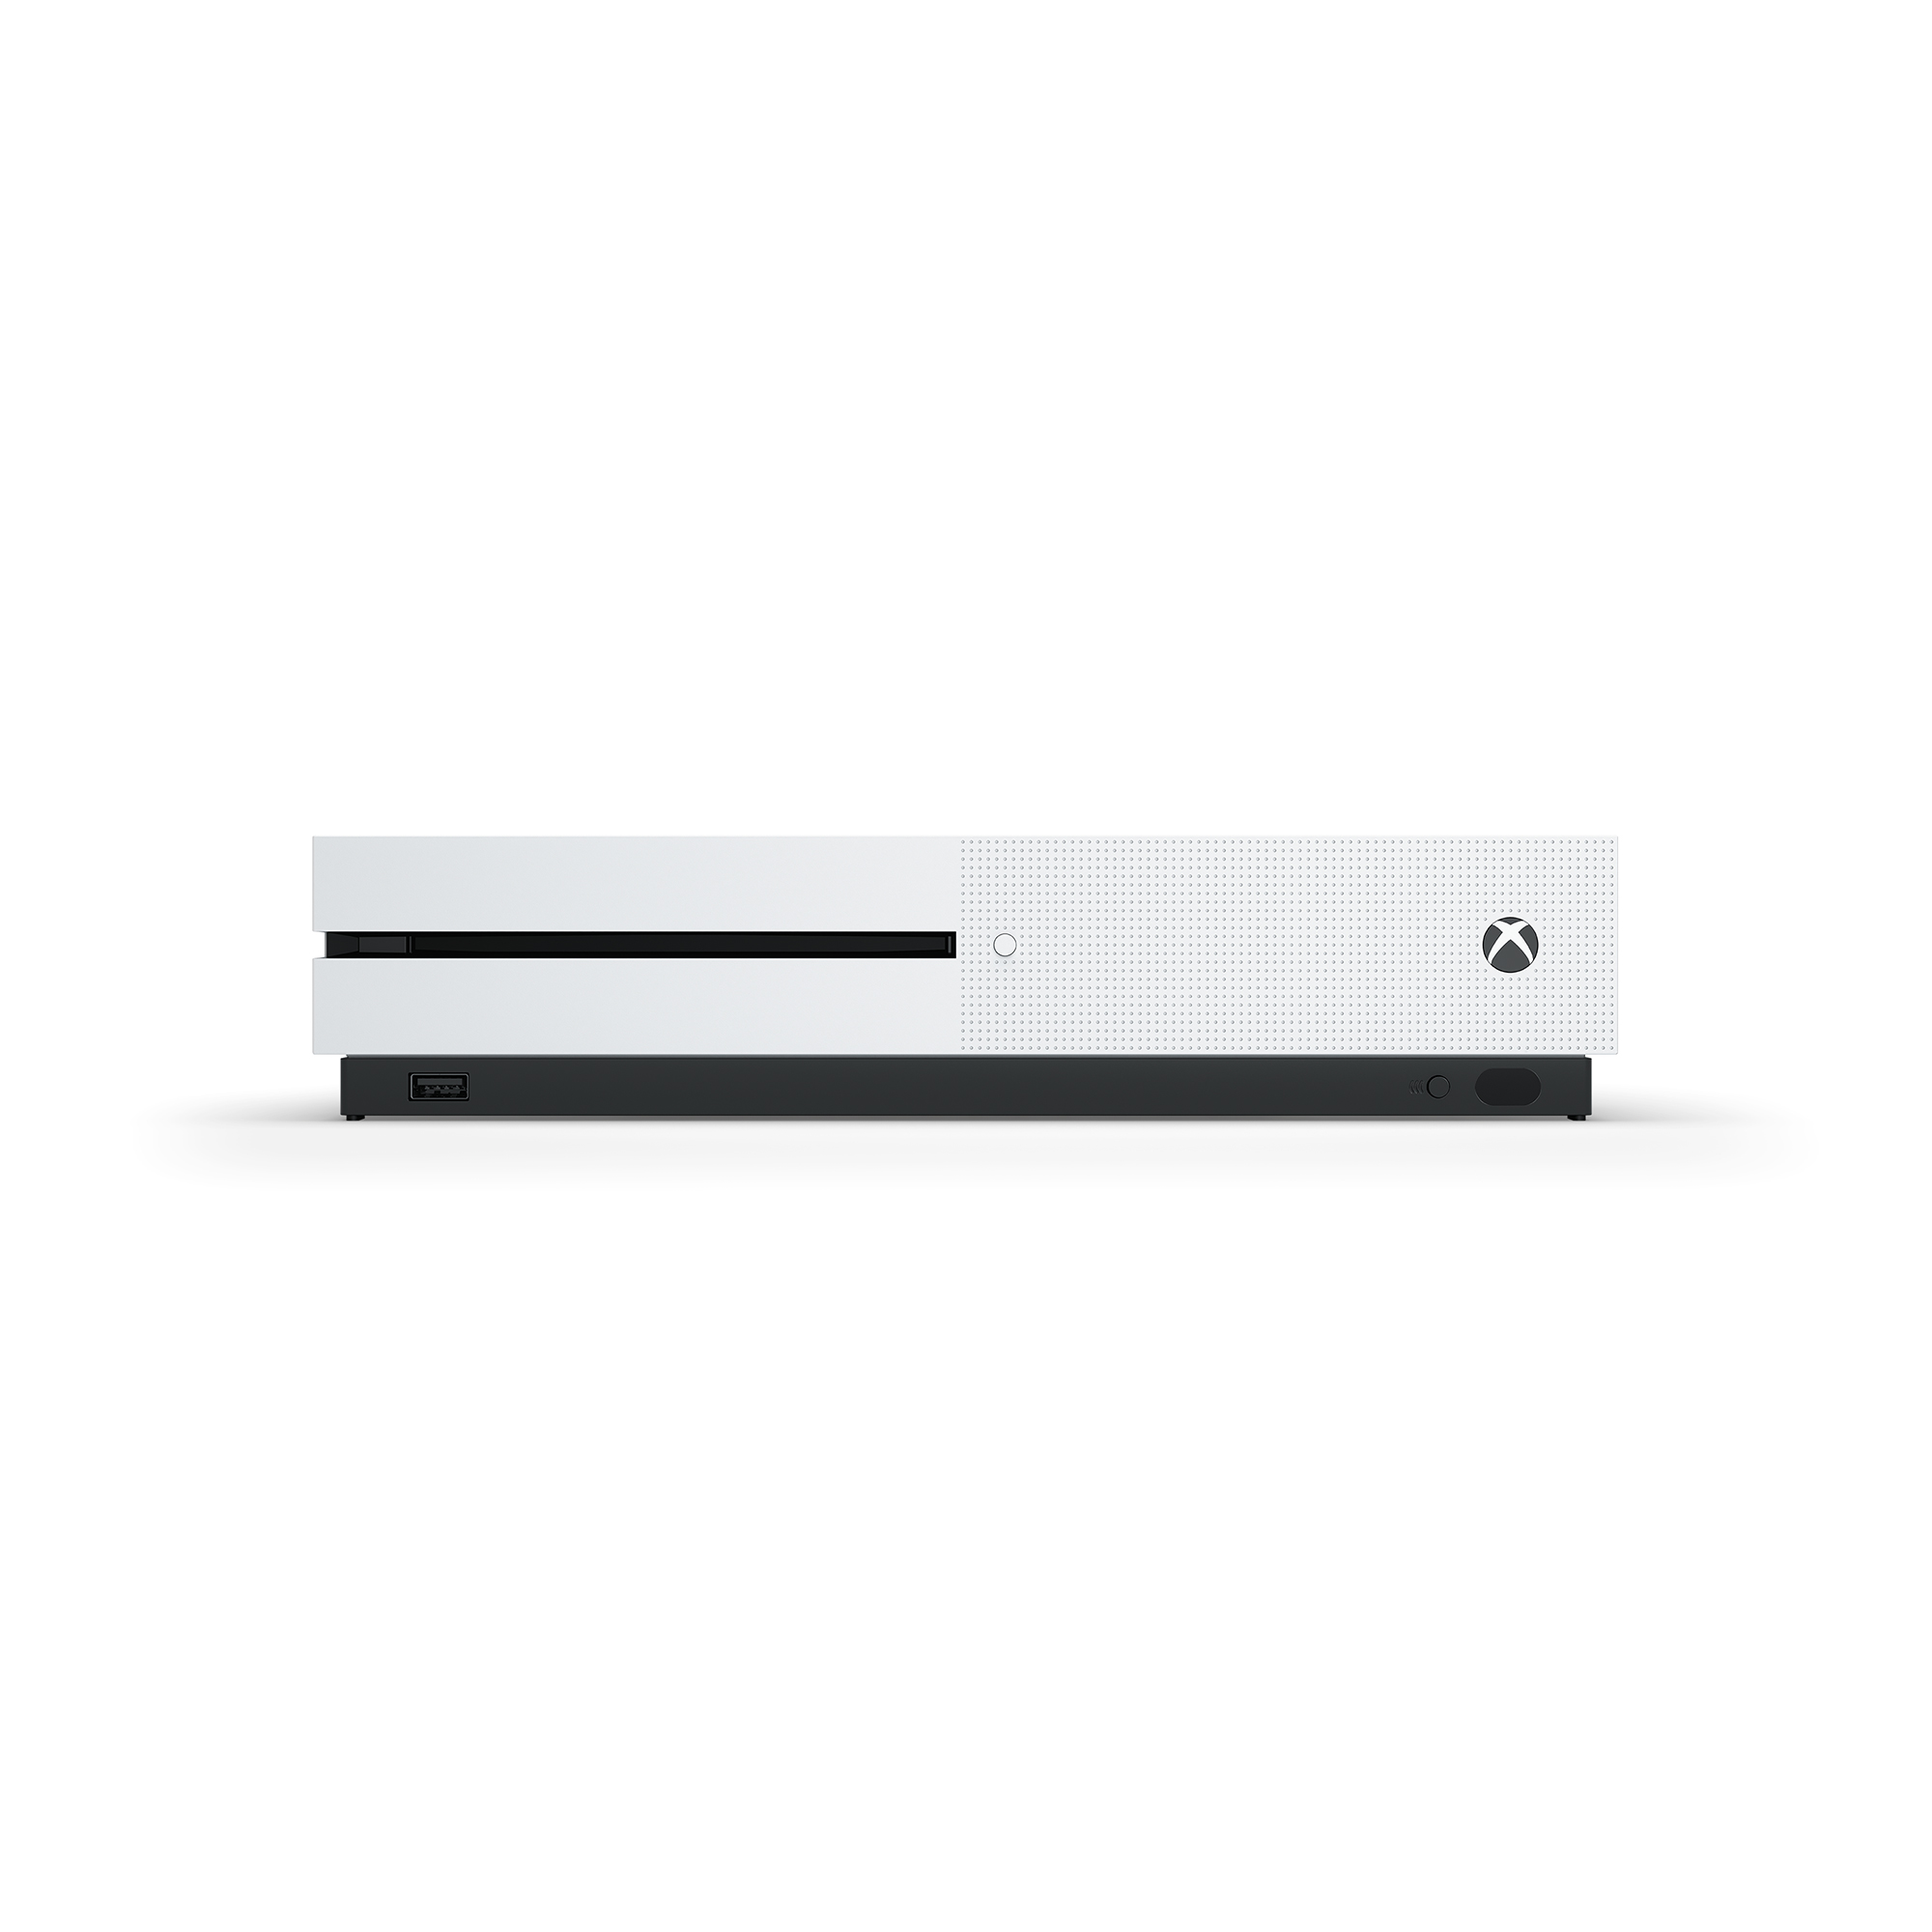 Microsoft Xbox One S 1TB NBA 2K19 Bundle, White, 234-00575 - image 5 of 10